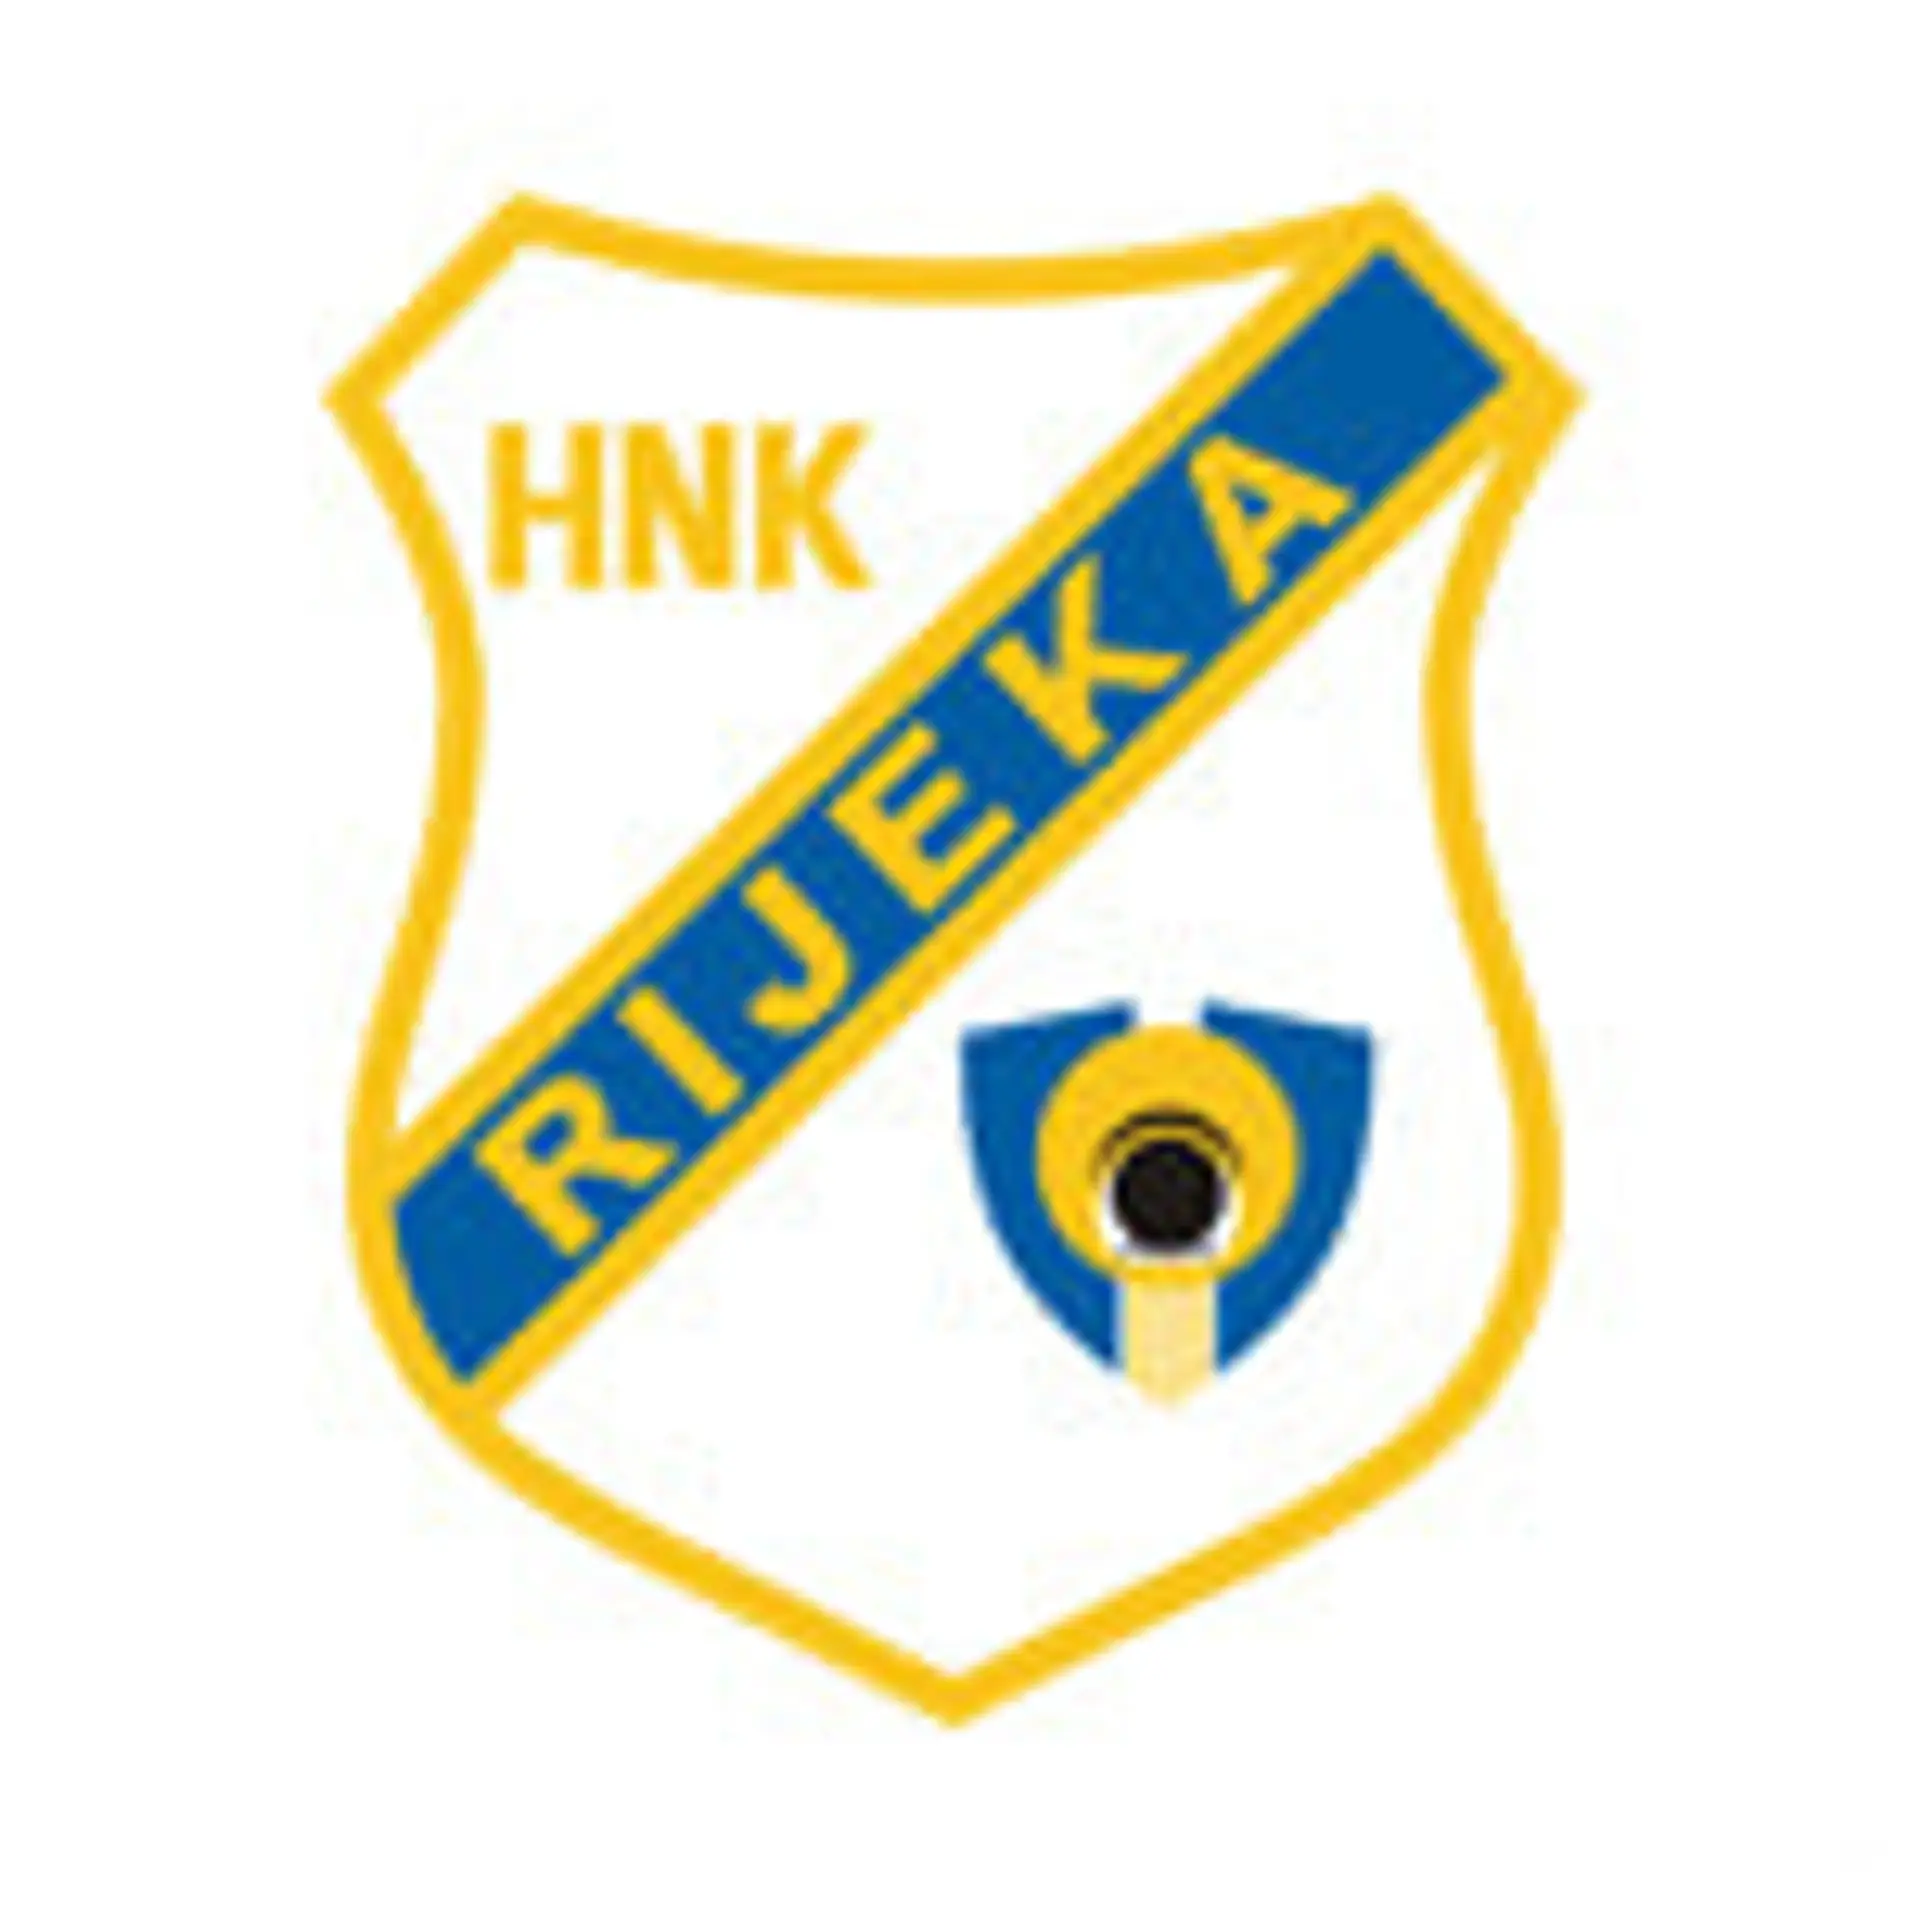 NK Osijek vs HNK Rijeka live score, H2H and lineups